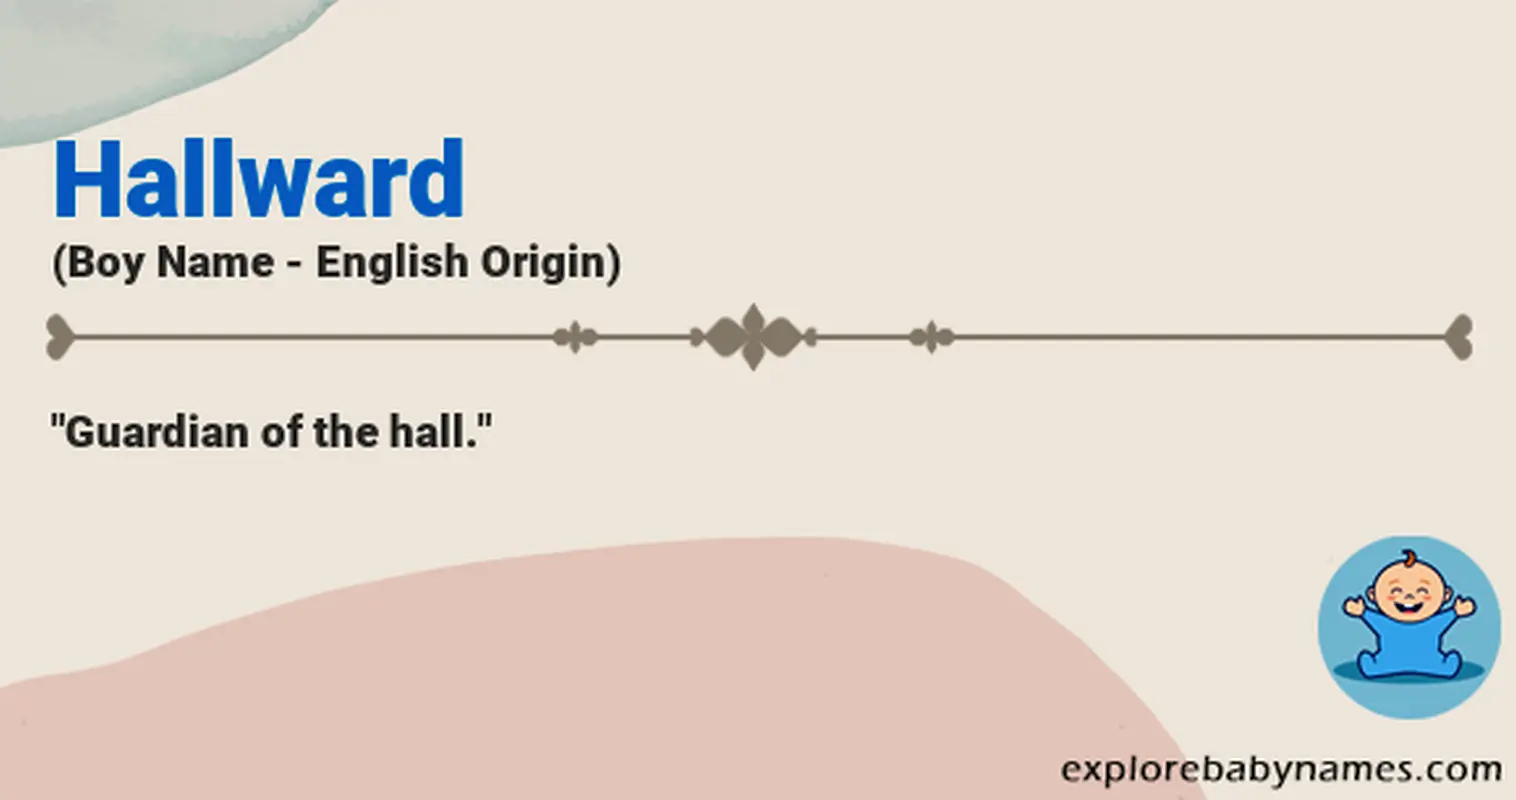 Meaning of Hallward